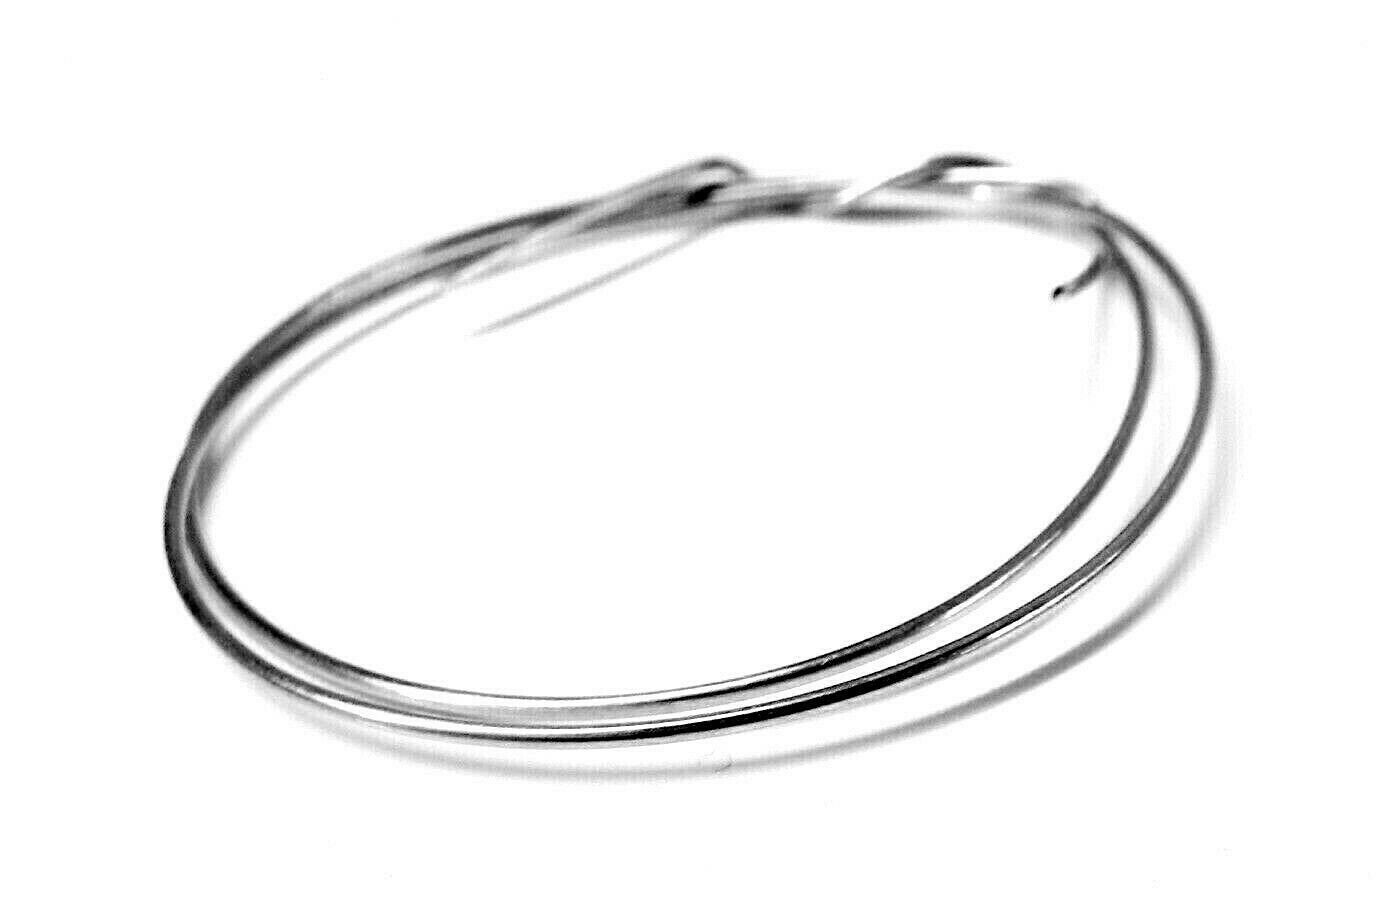 JTS Silver Solder Wire Soldering Jewelry Making Repair Medium Solder Silver 5' 20ga